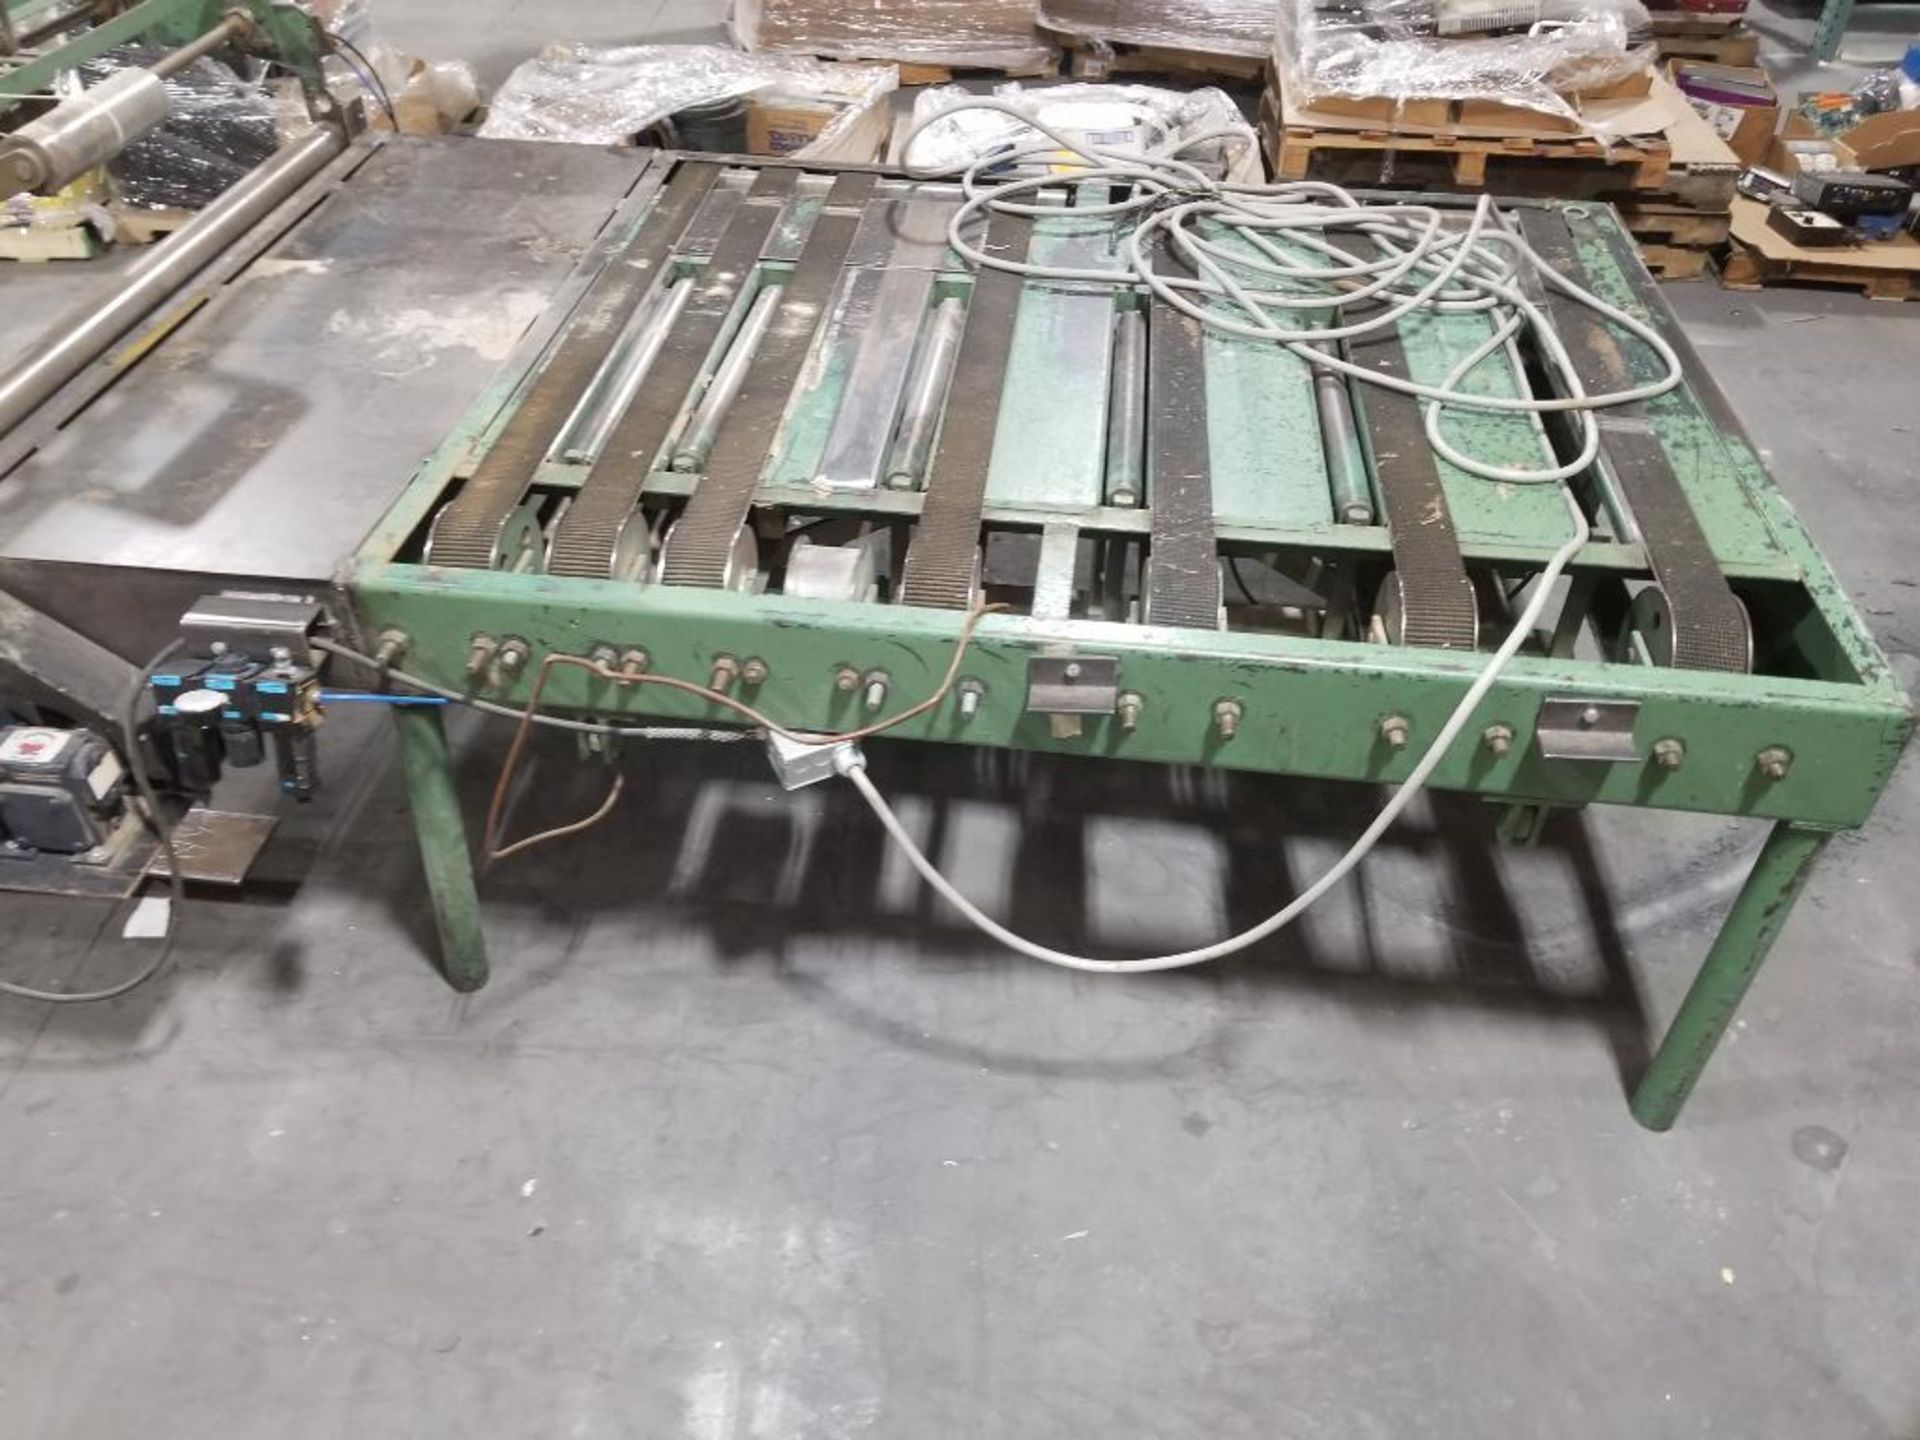 Conveyor table. 116x60x45 LxWxH.